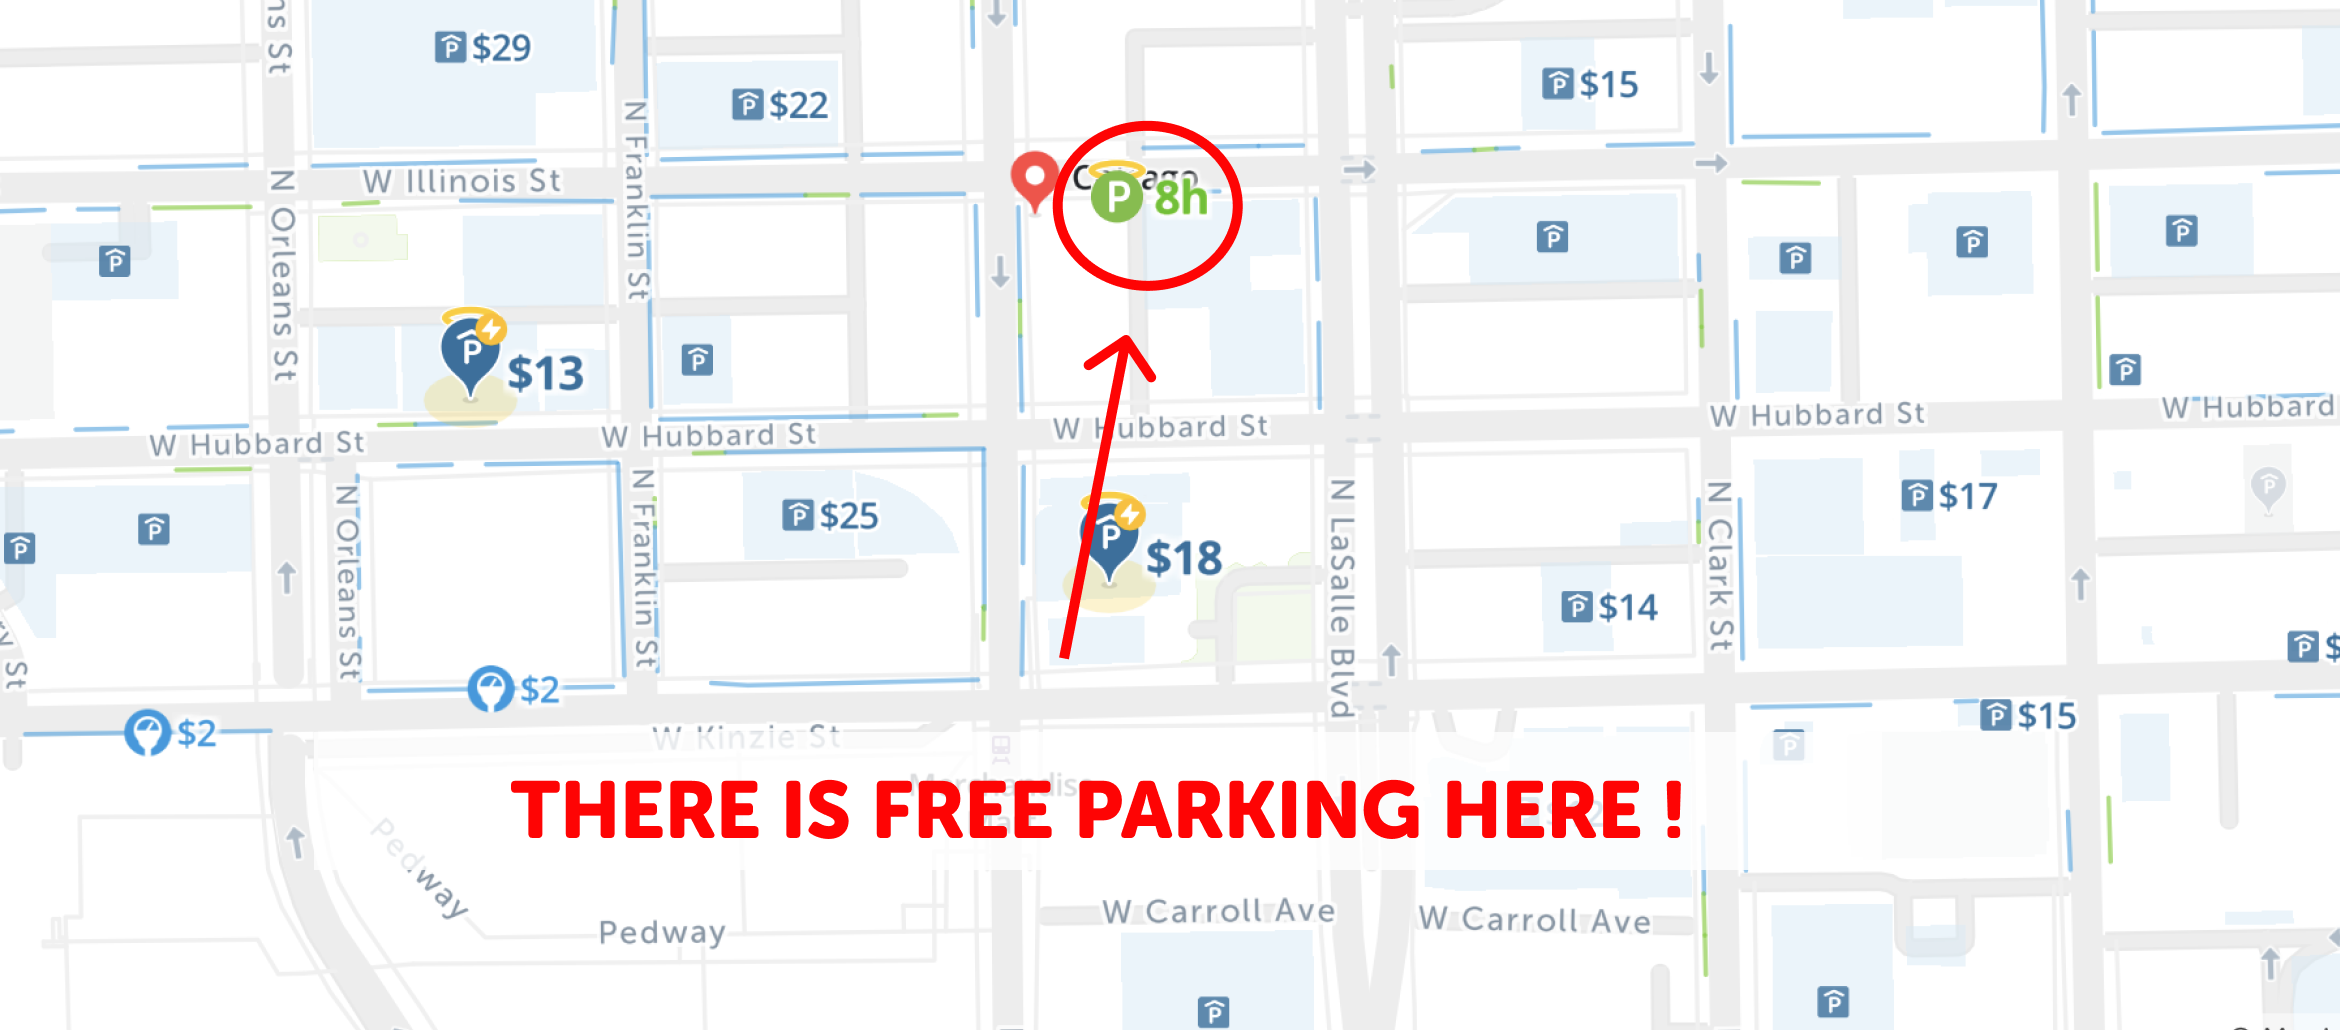 2021 Map Of Free Parking In Chicago Spotangels